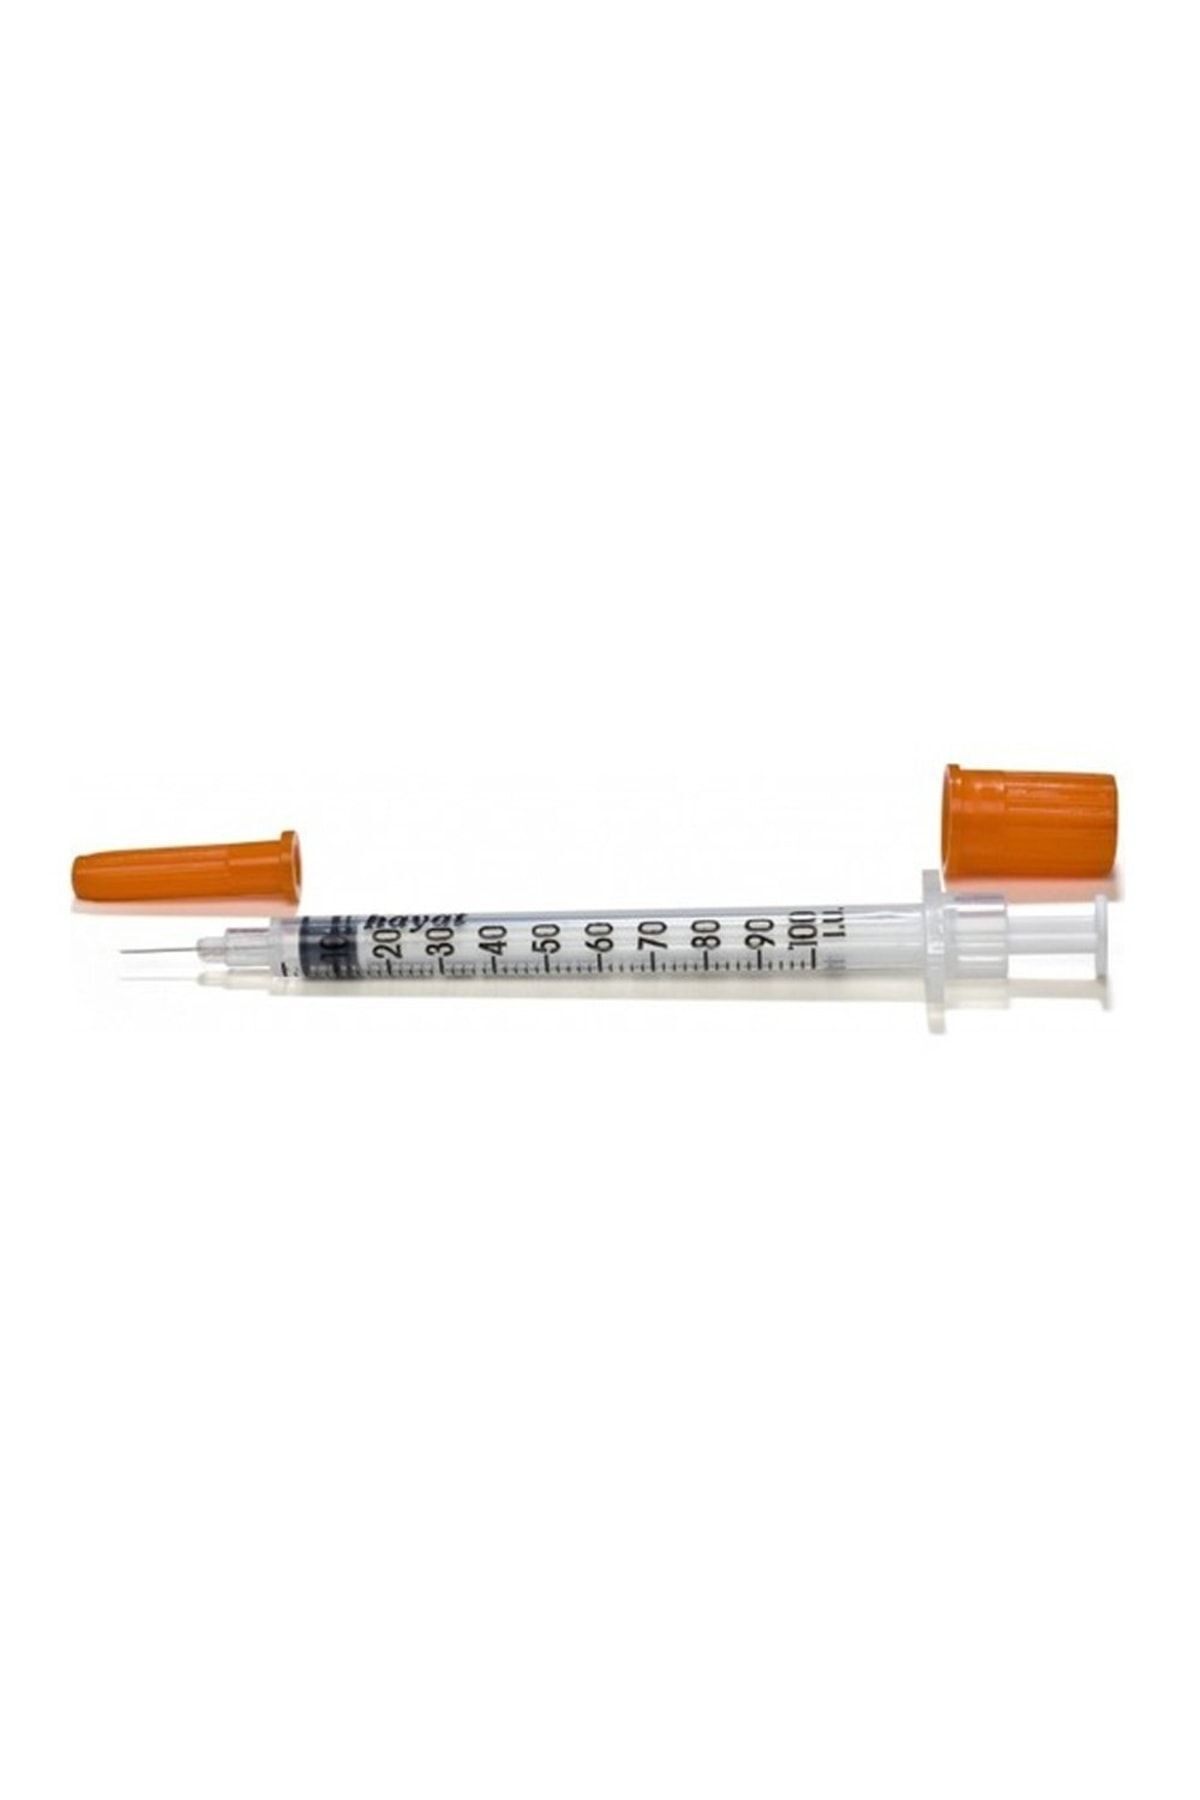 Ayset Süper Insulin 1 ml 3p 50 Adet